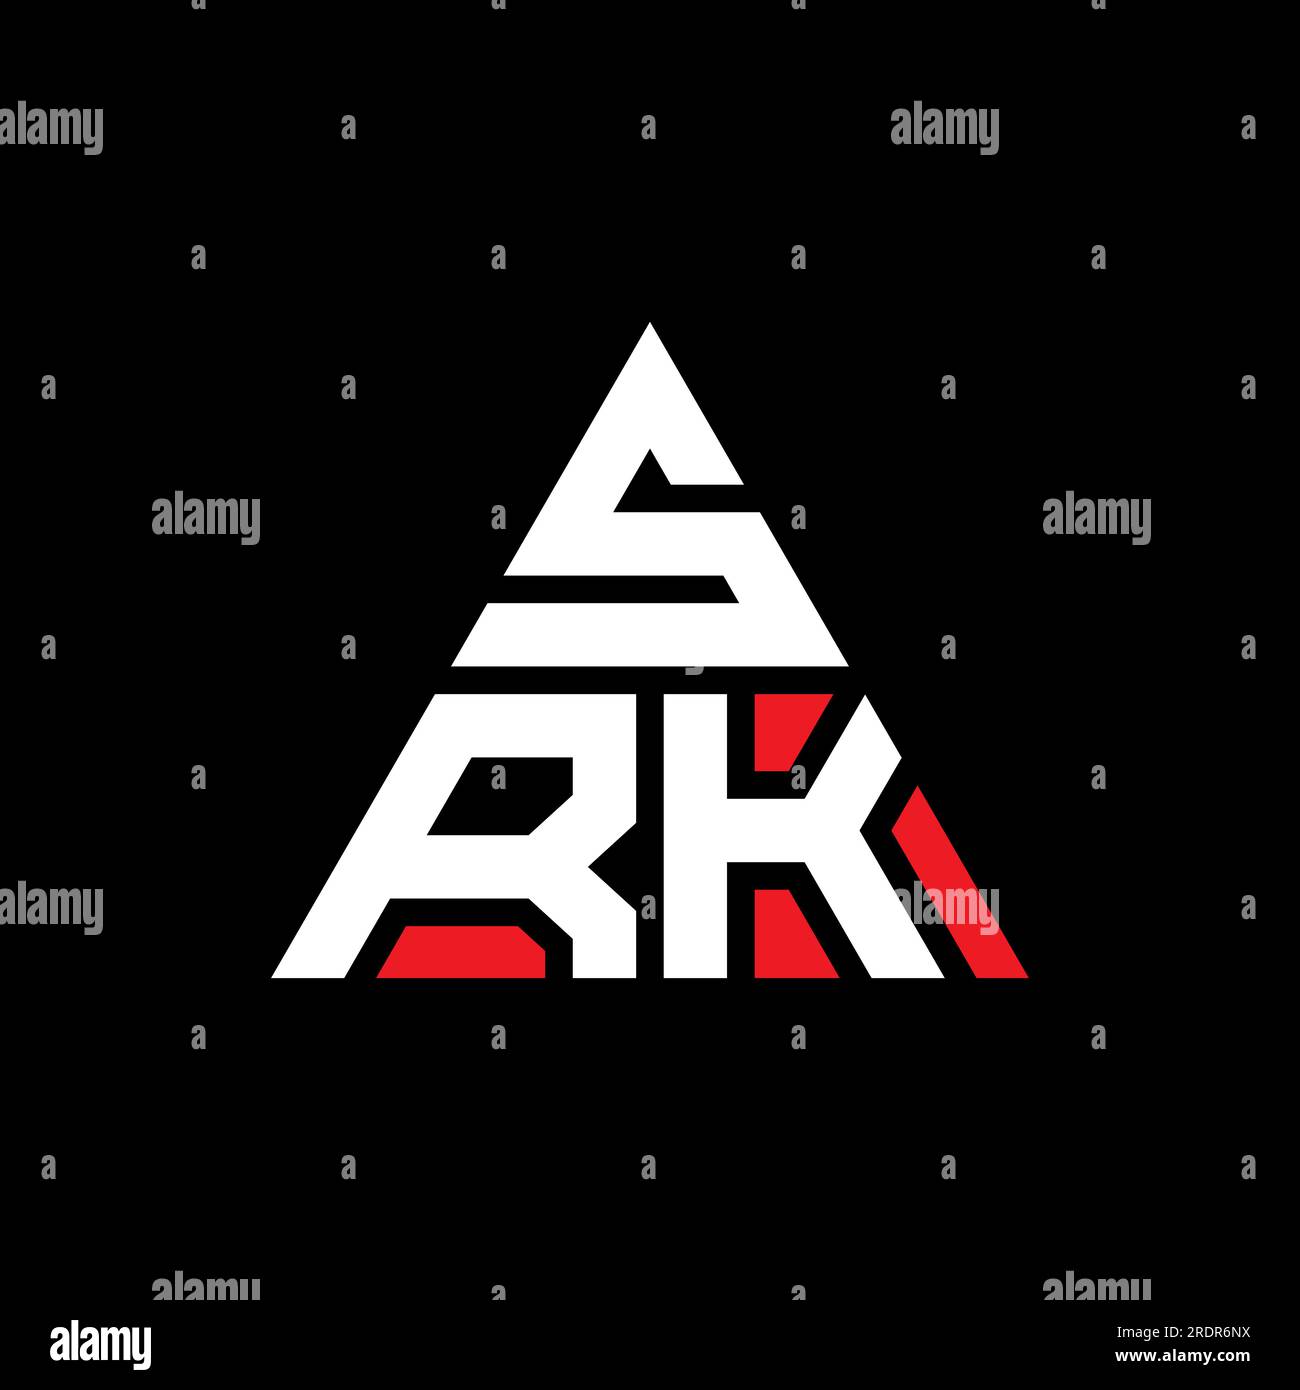 Srk Logo: Over 15 Royalty-Free Licensable Stock Illustrations & Drawings |  Shutterstock